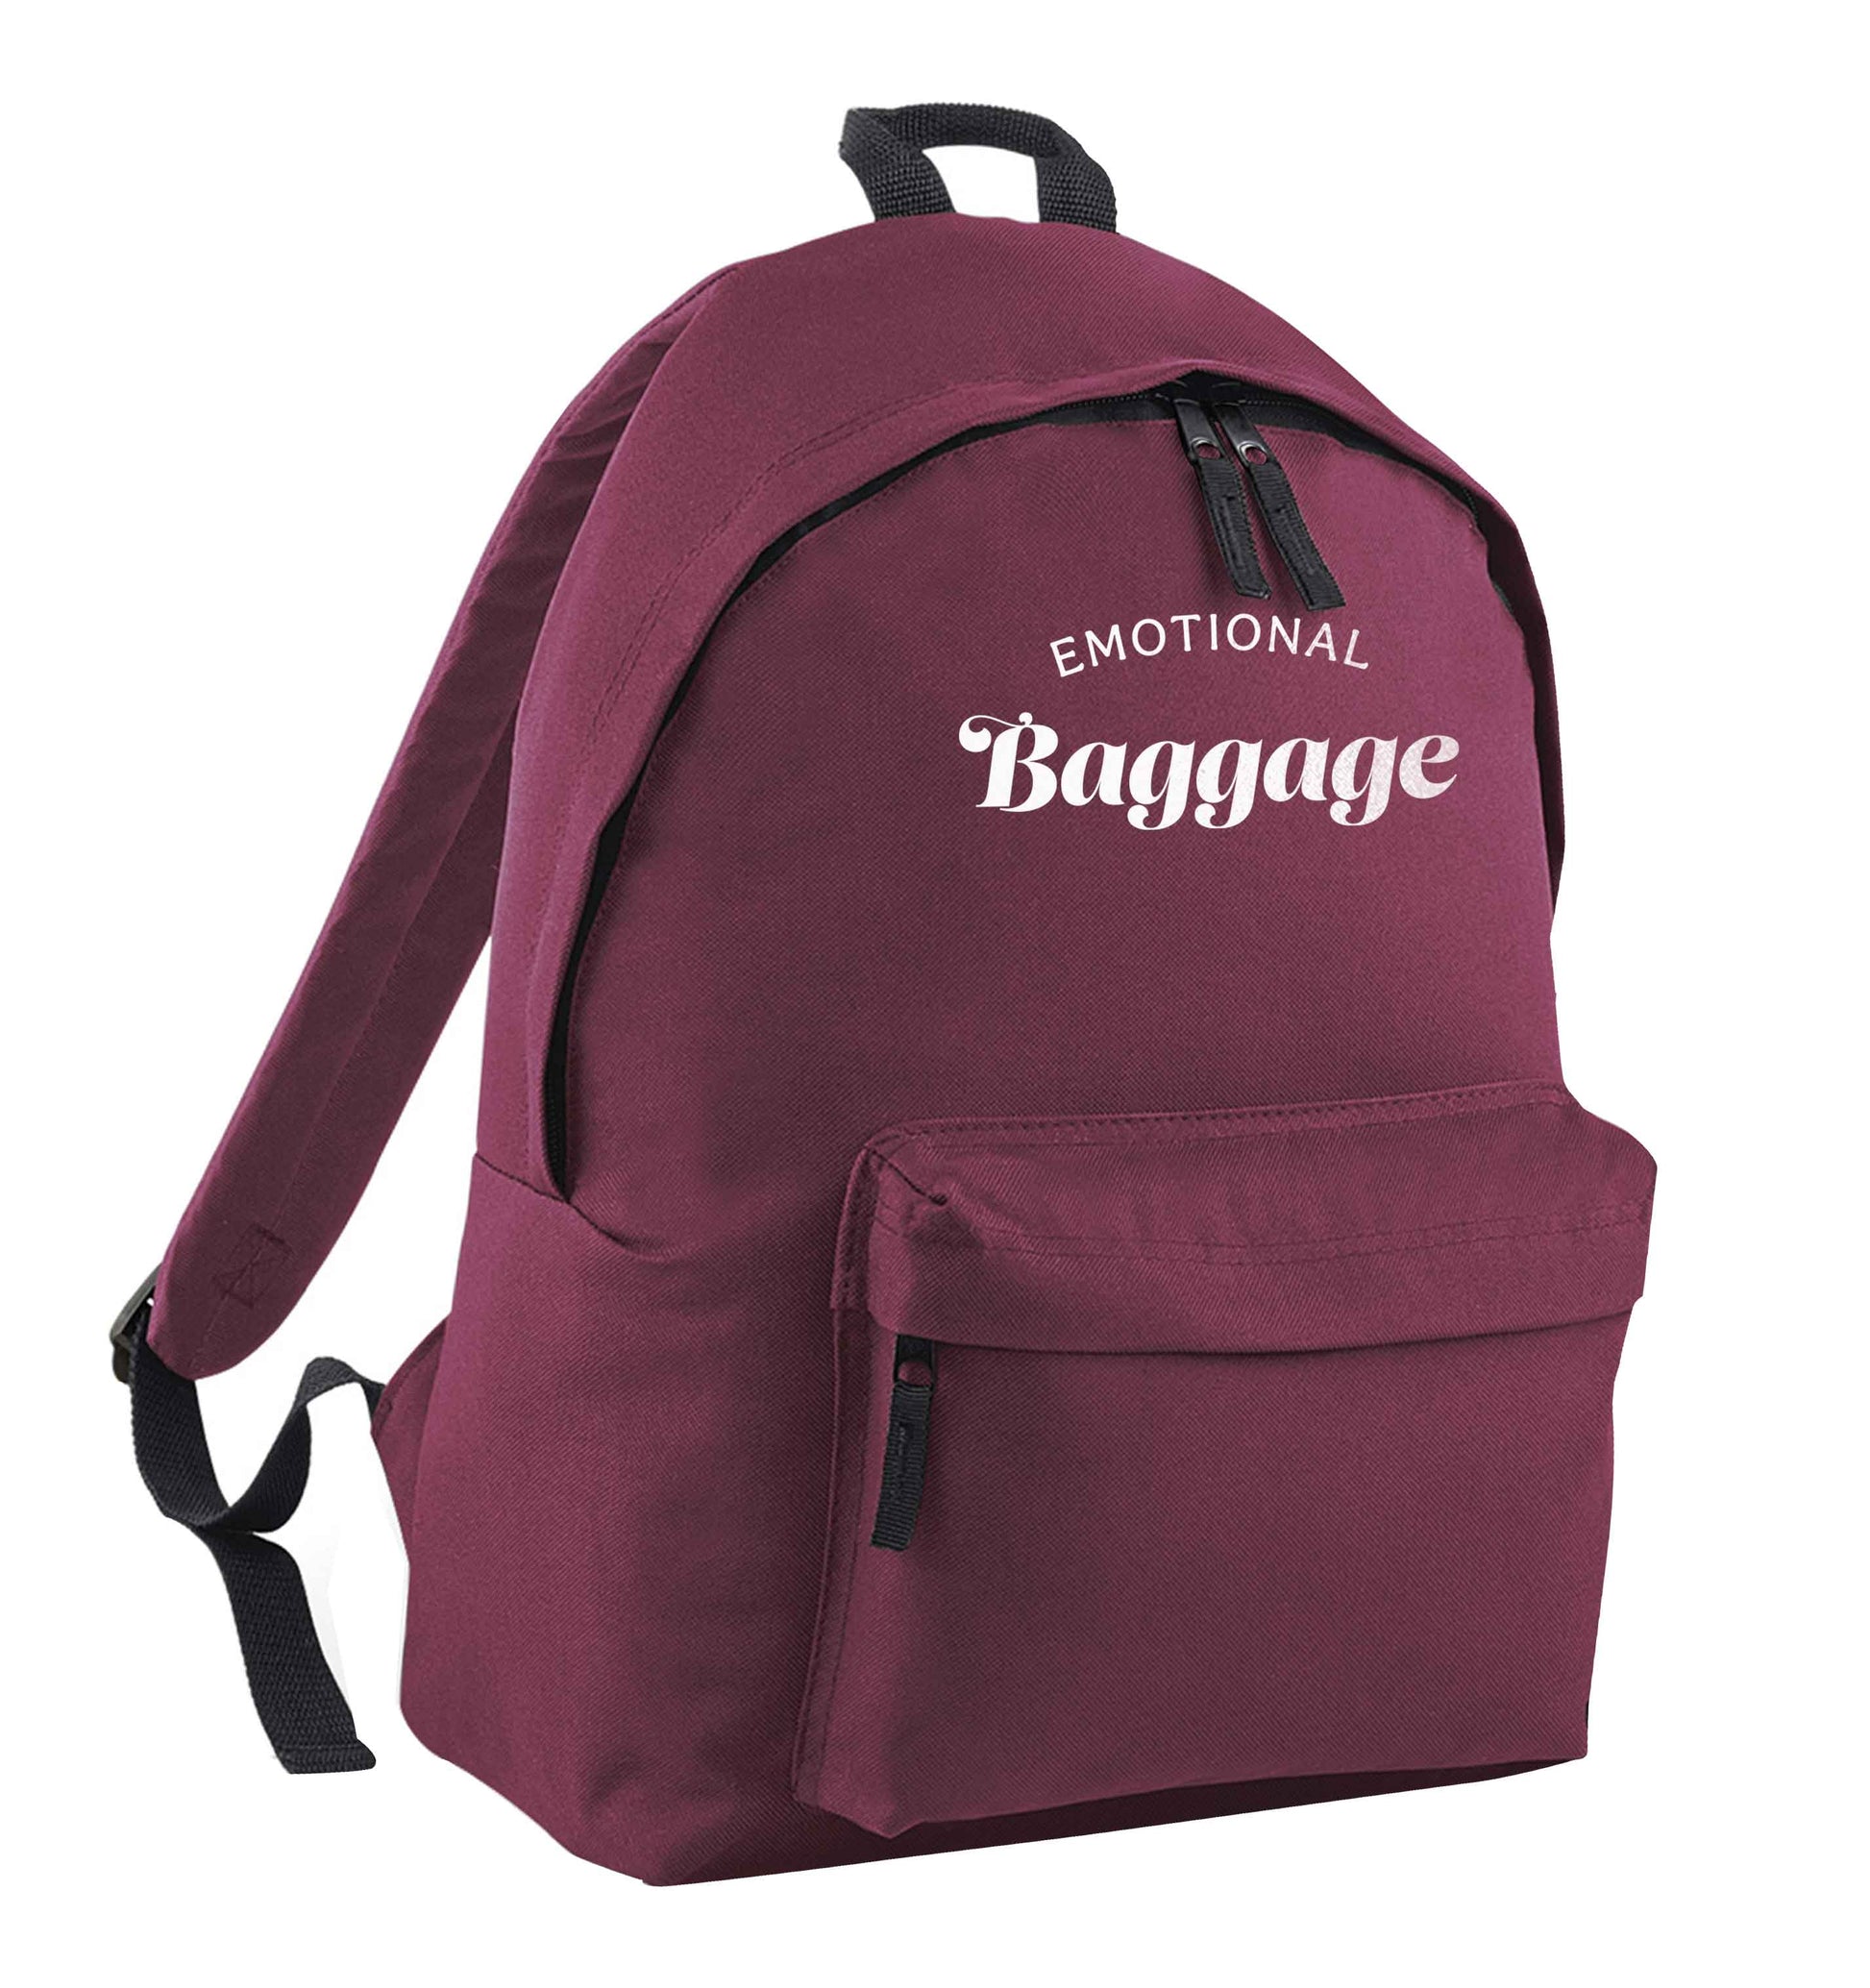 Emotional baggage maroon adults backpack